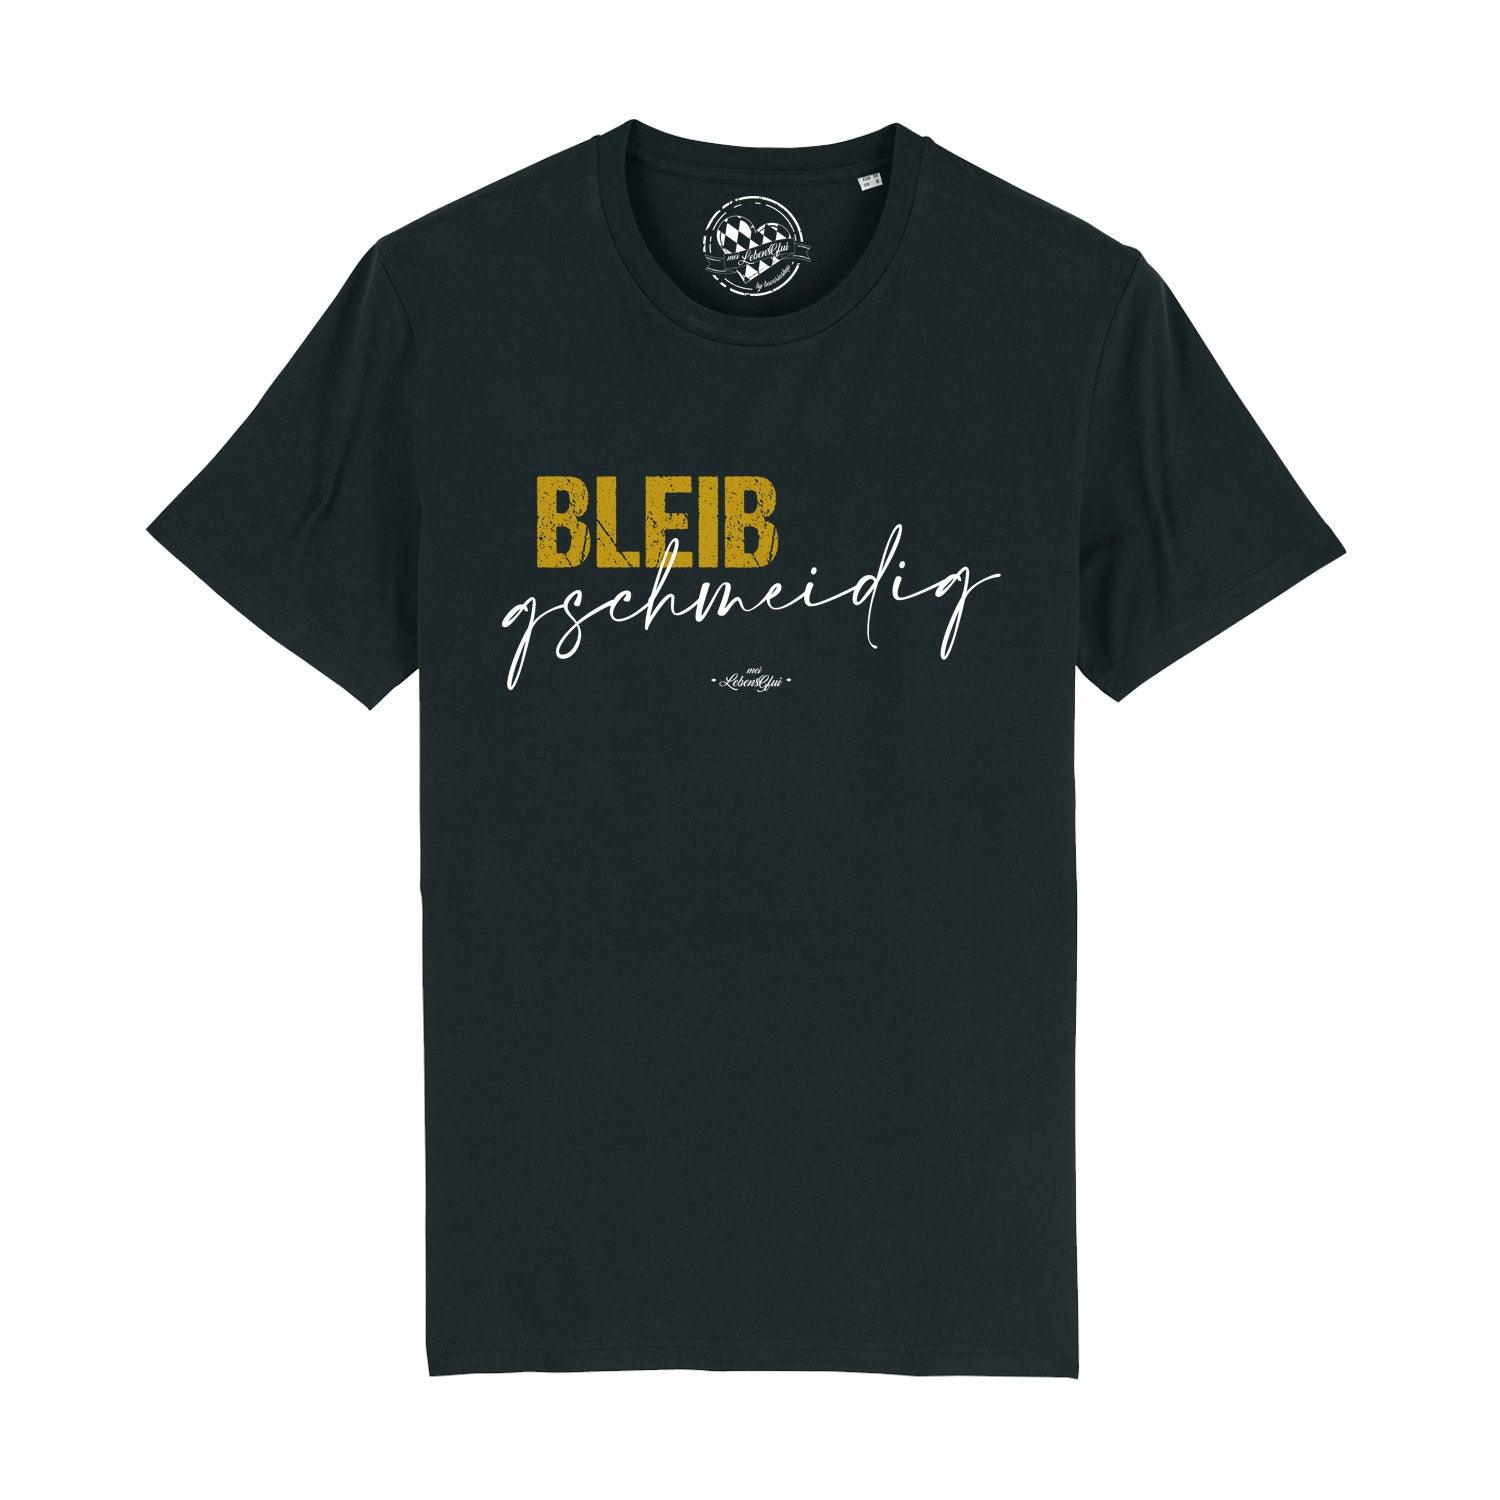 Herren T-Shirt "Bleib gschmeidig" - bavariashop - mei LebensGfui